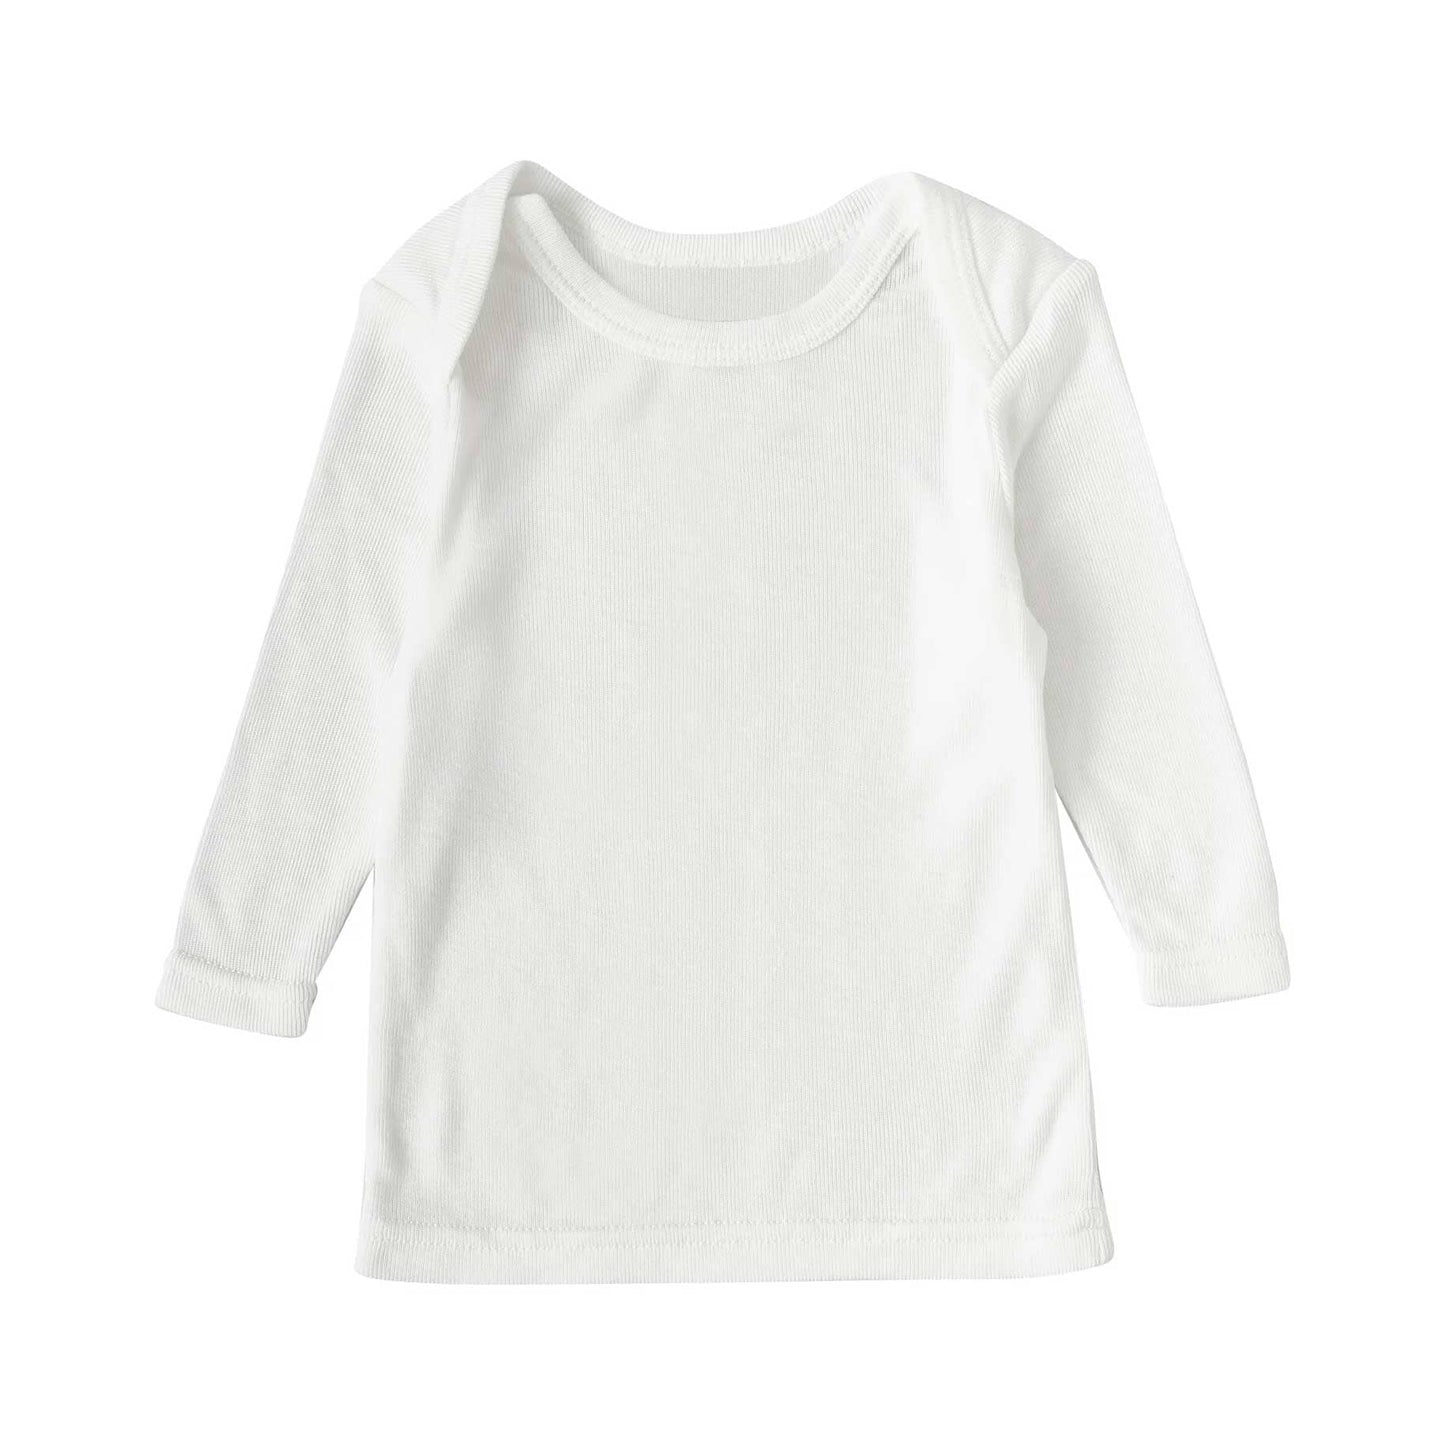 Style N Comfort Kid's Long Sleeve Shirt Boy's Sweat Shirt RAM White S(0-3 Months) 